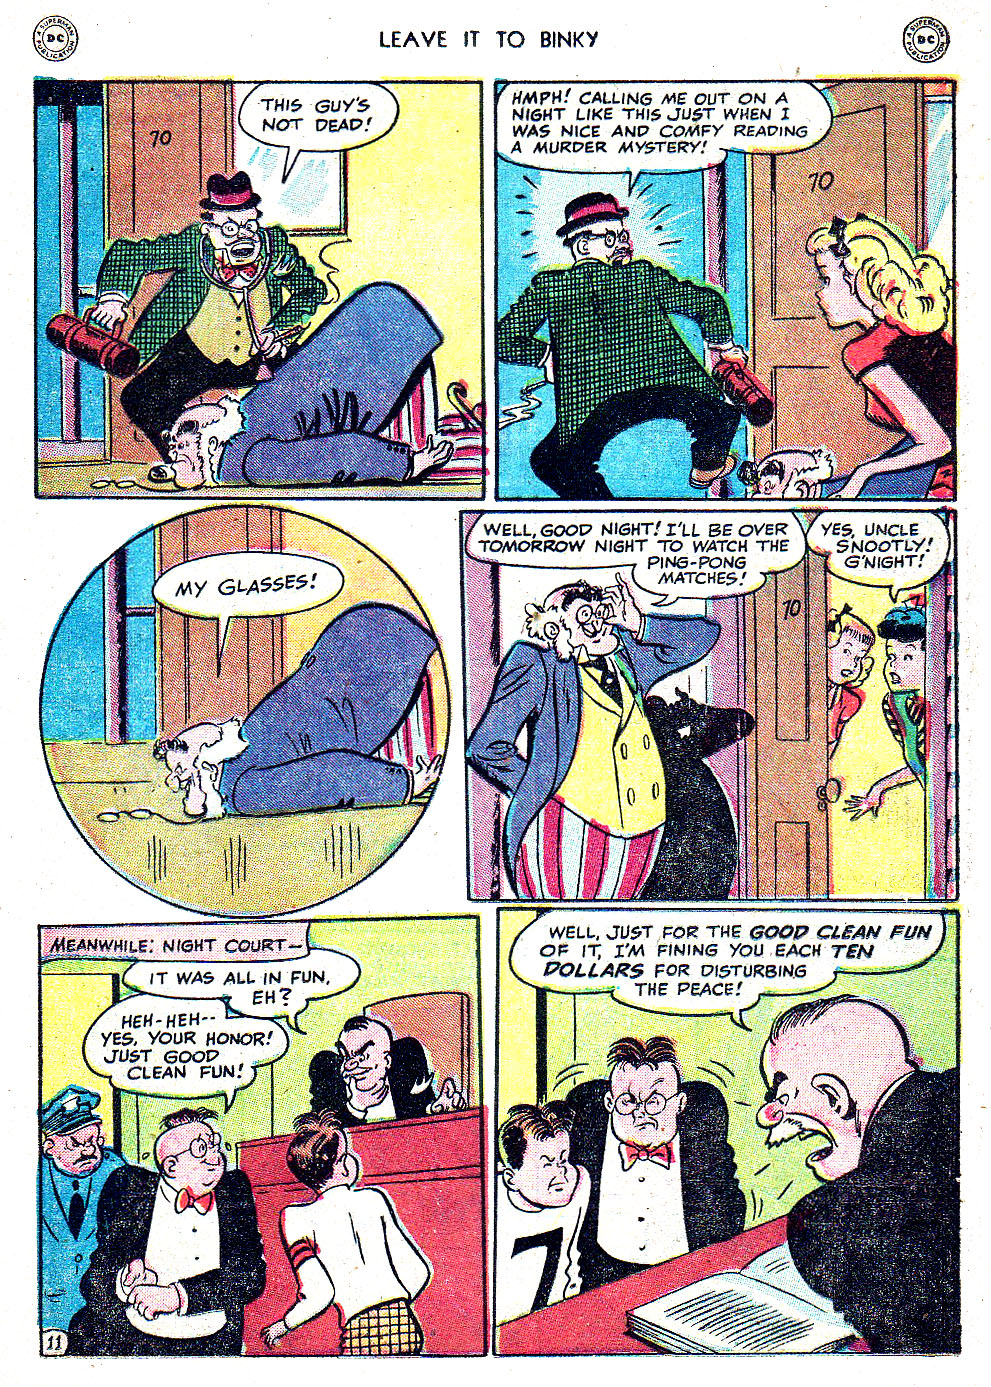 Read online Leave it to Binky comic -  Issue #4 - 31